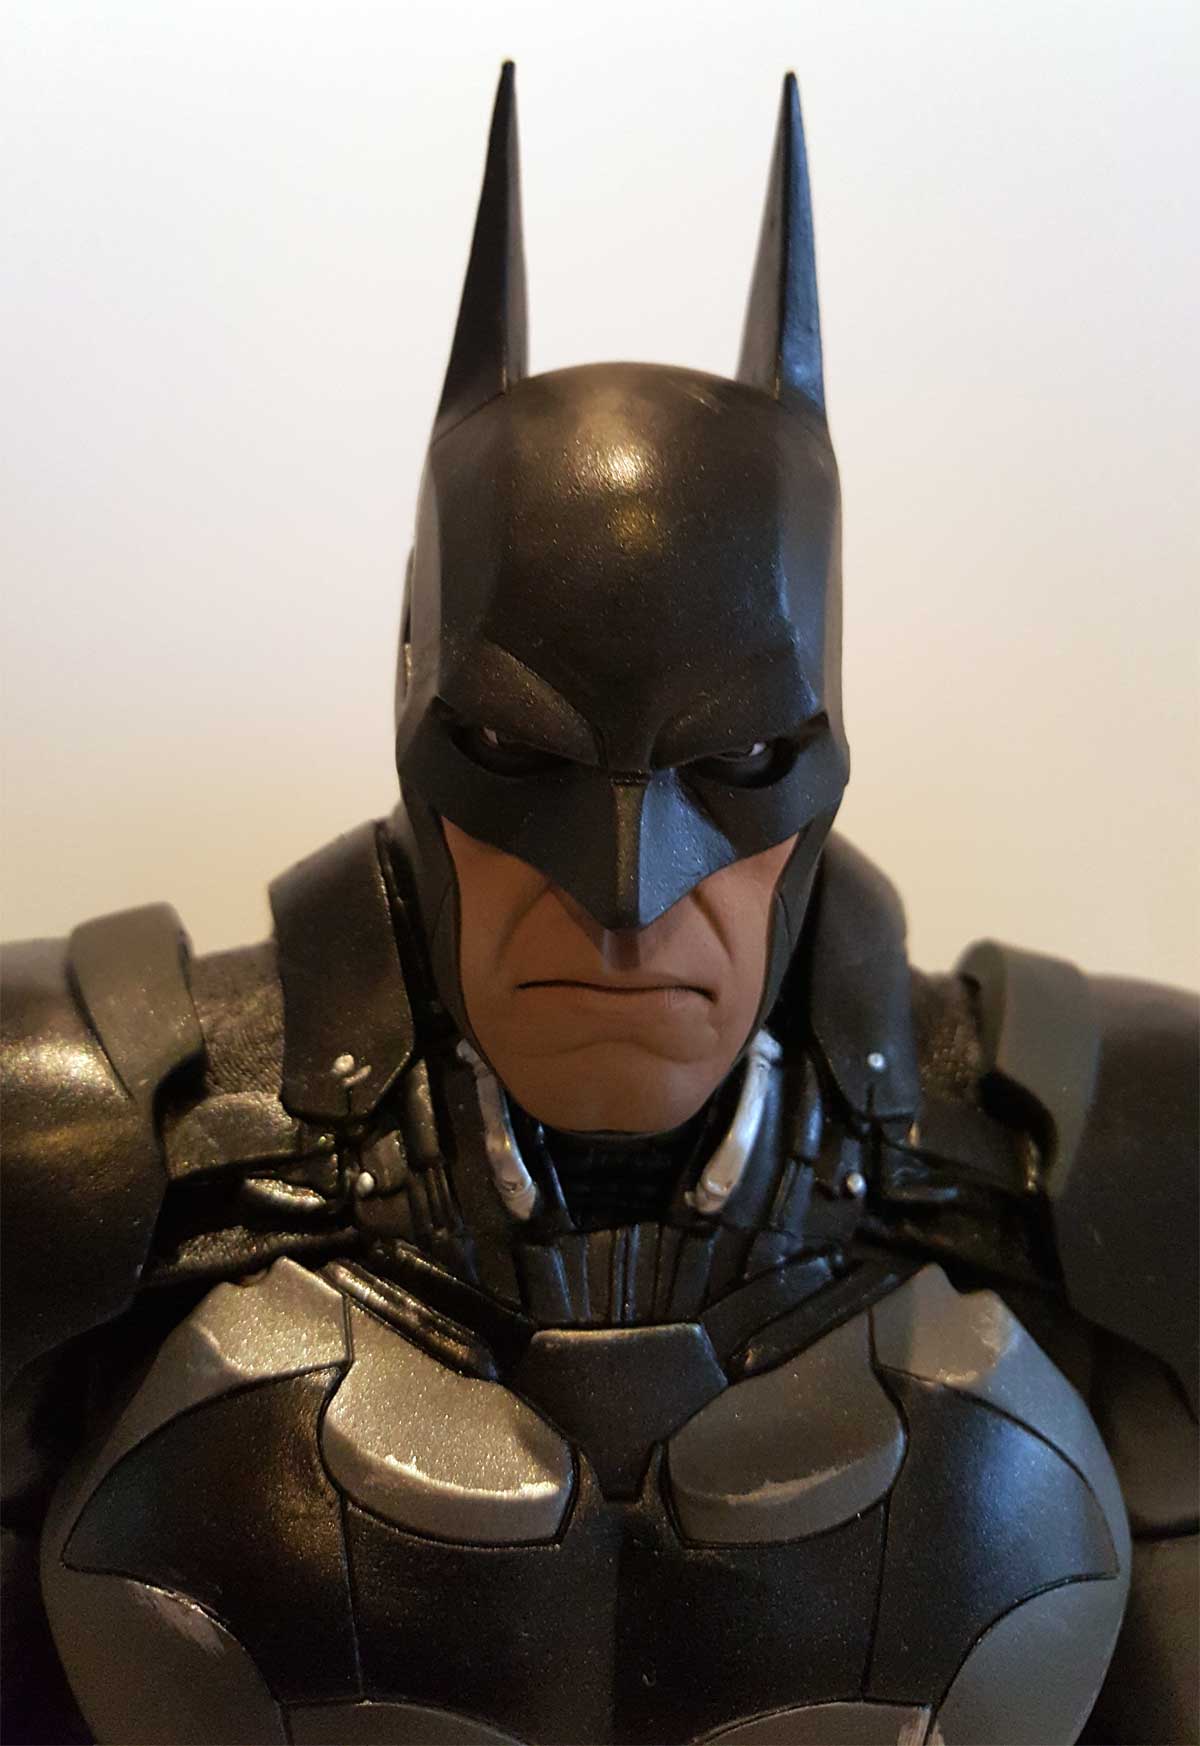 NECA Batman Arkham Knight 1/4 Scale Action Figure Review - Impulse Gamer